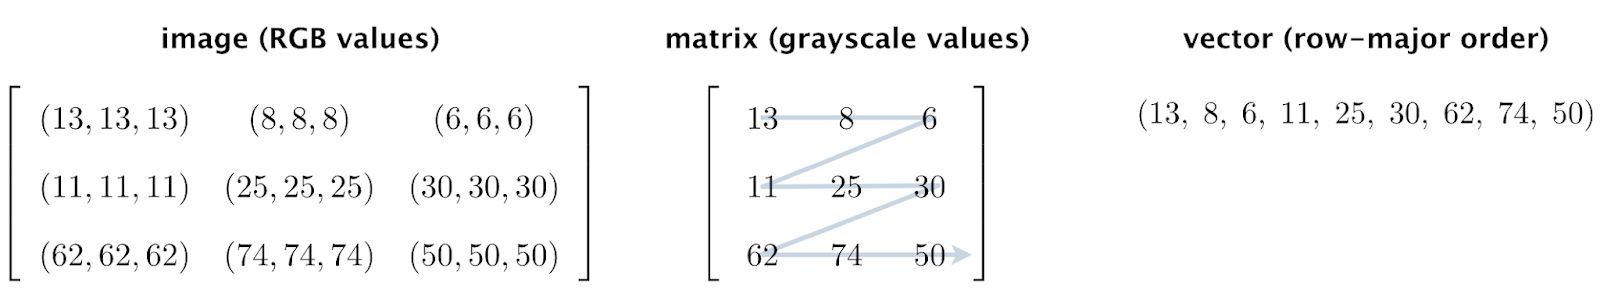 RGB matrix to grayscale matrix to row-major vector